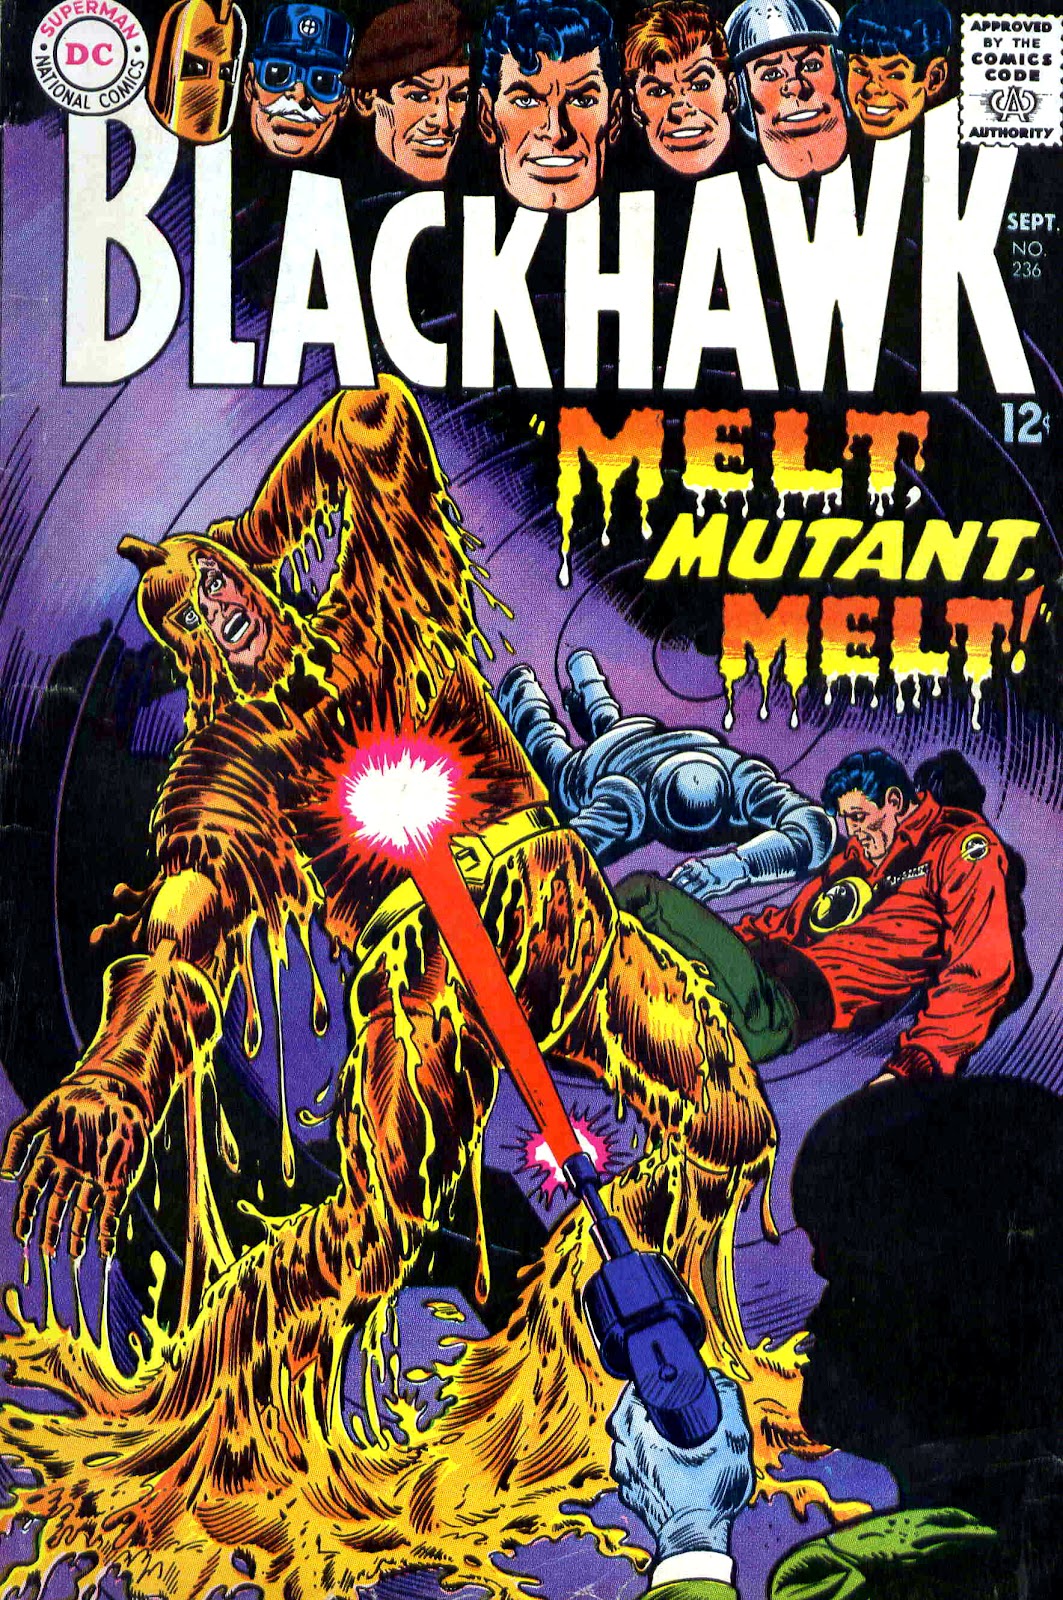 Blackhawk (1957) issue 236 - Page 1